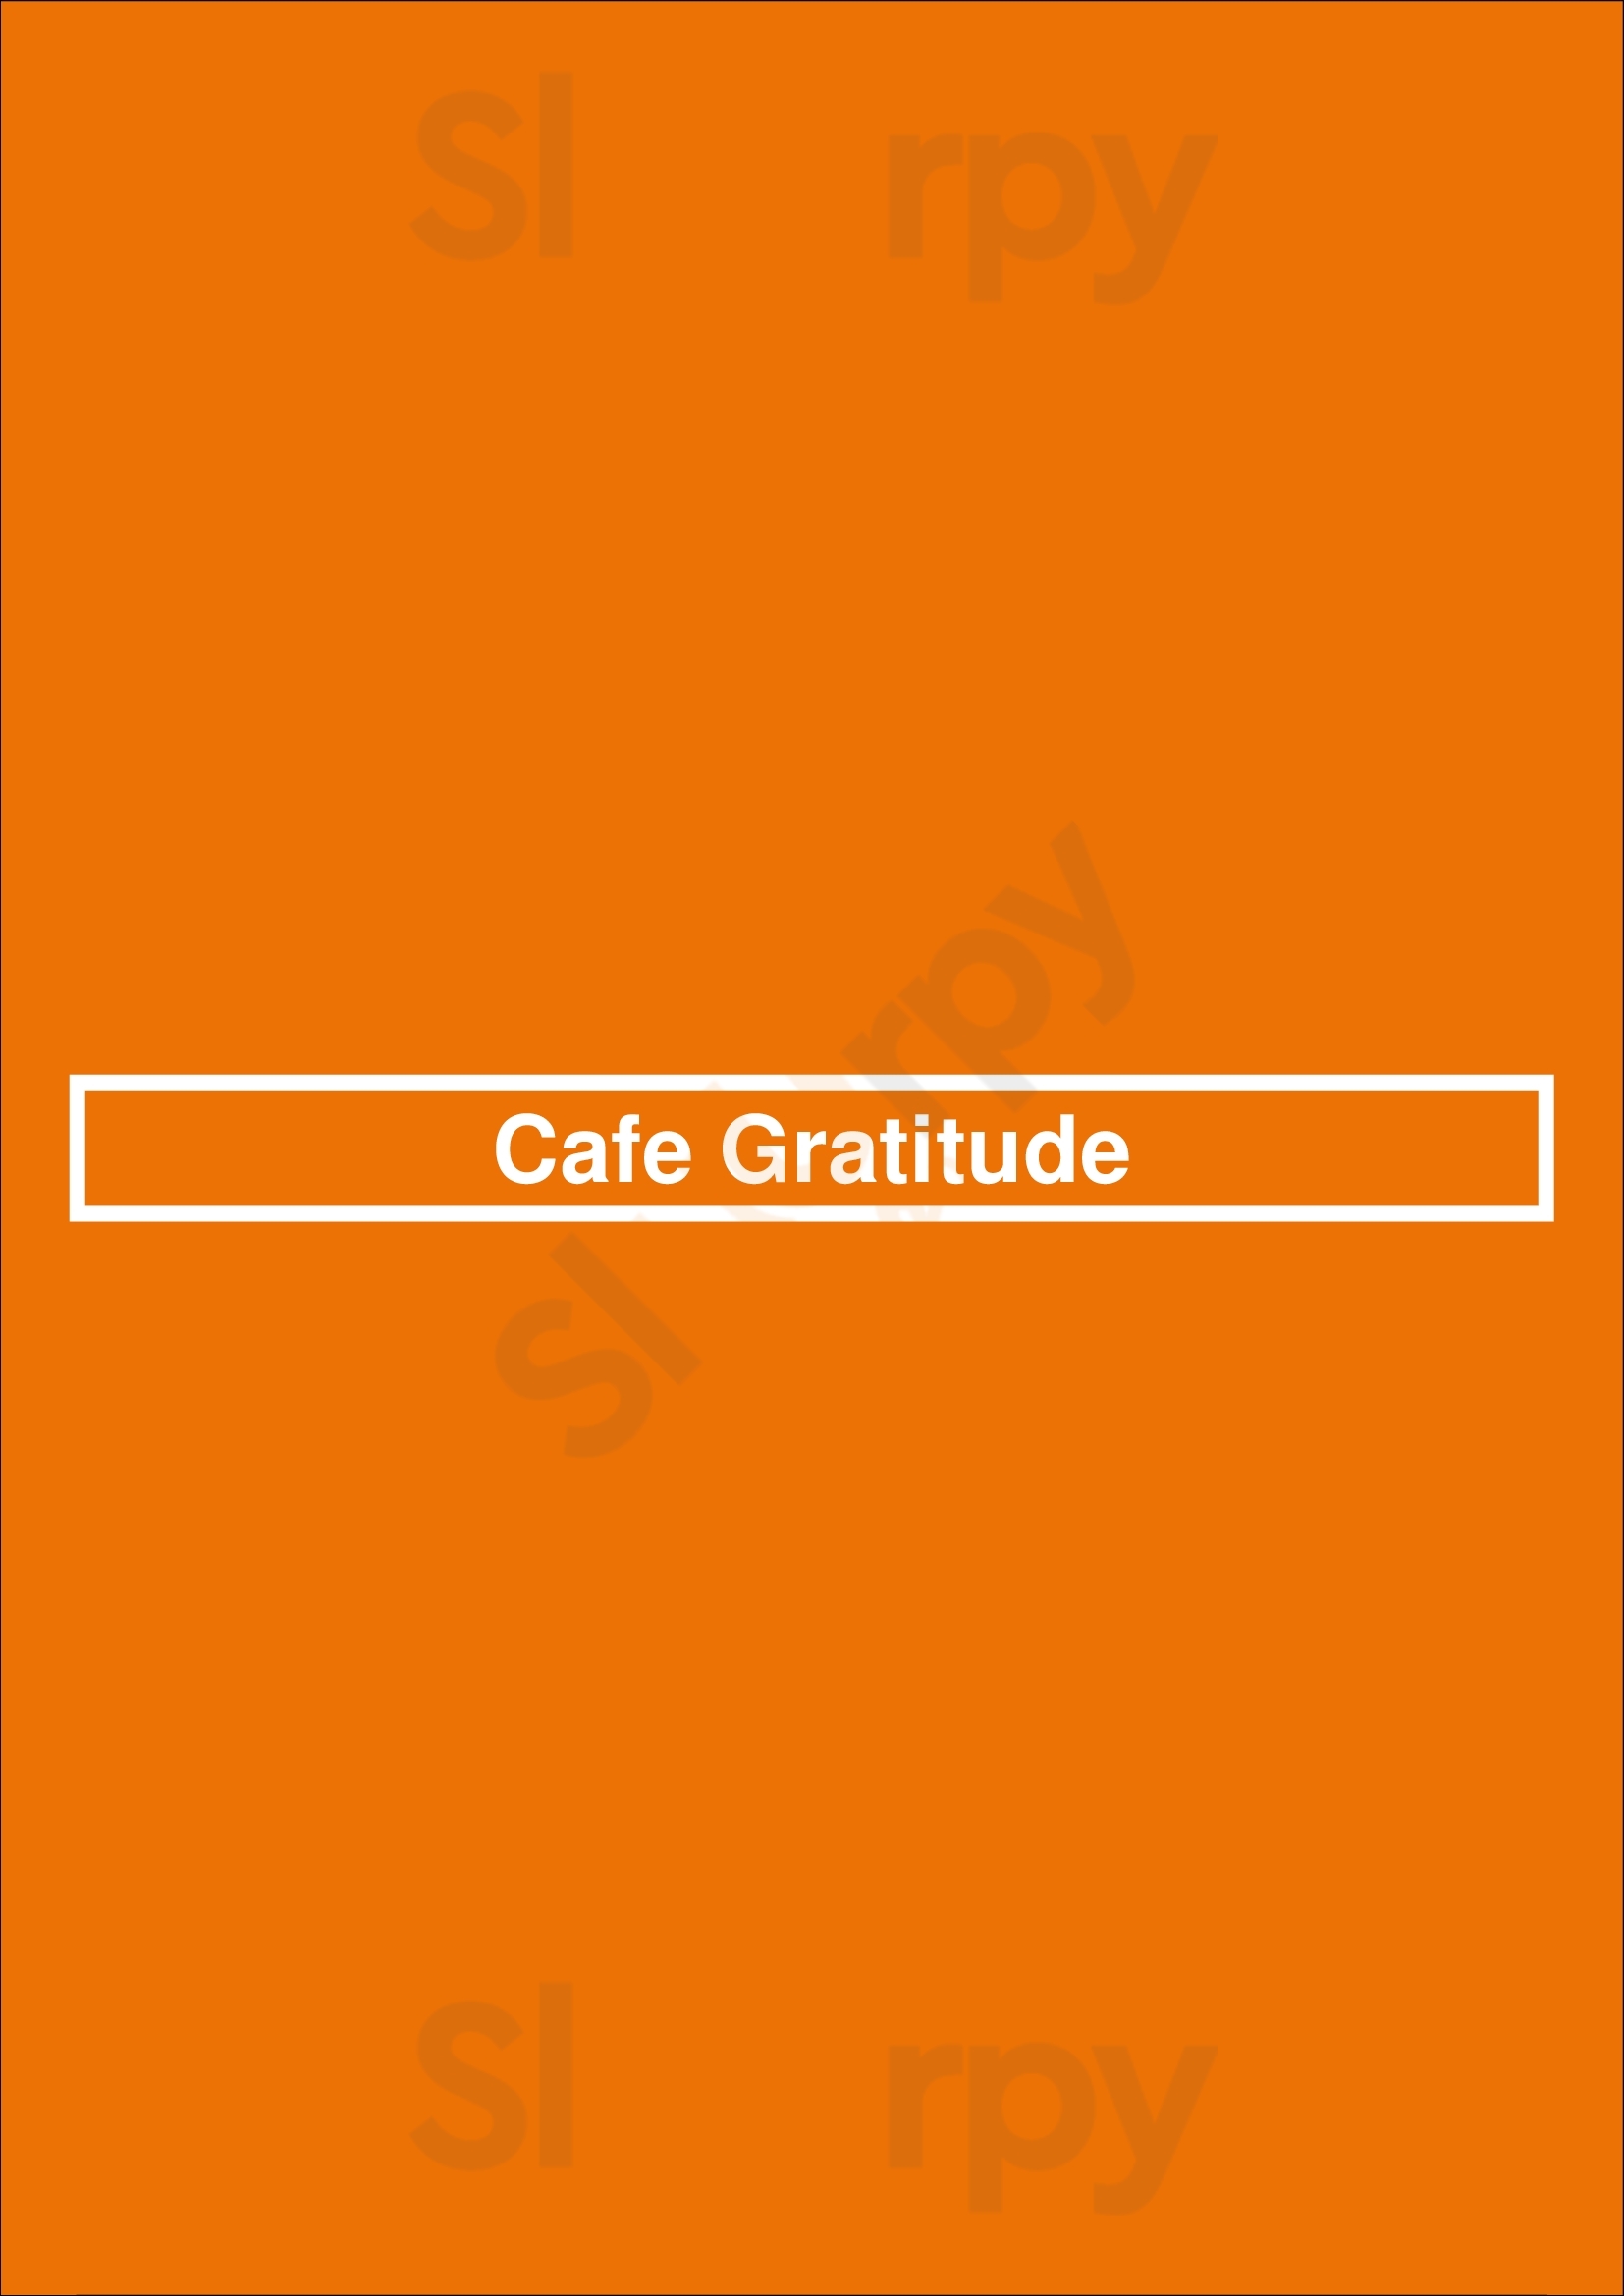 Cafe Gratitude Venice Los Angeles Menu - 1